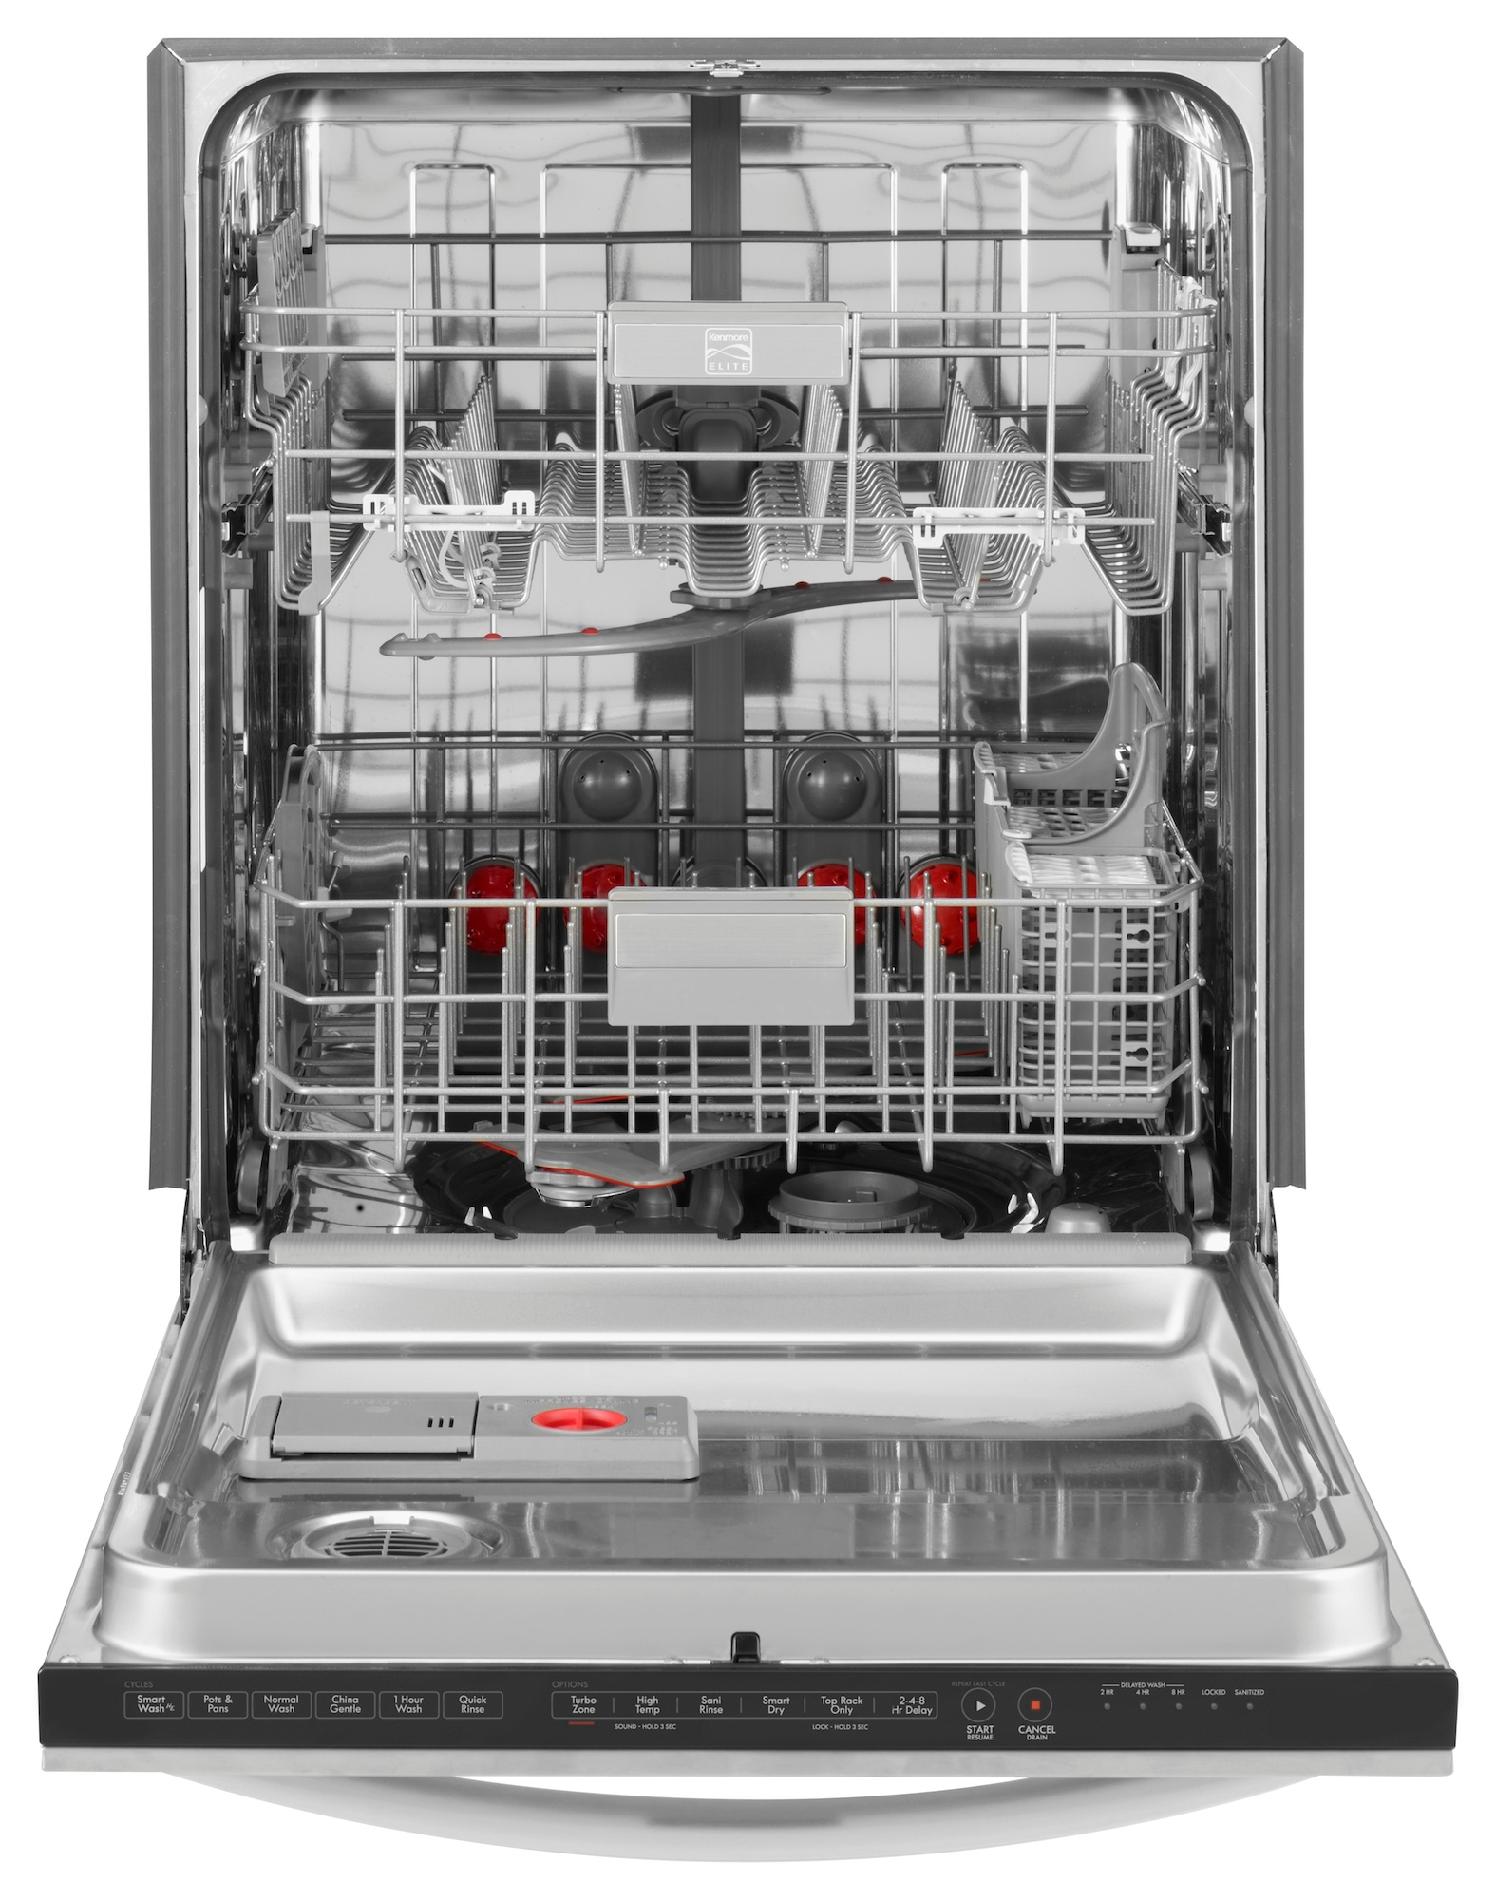 kenmore 665 dishwasher review